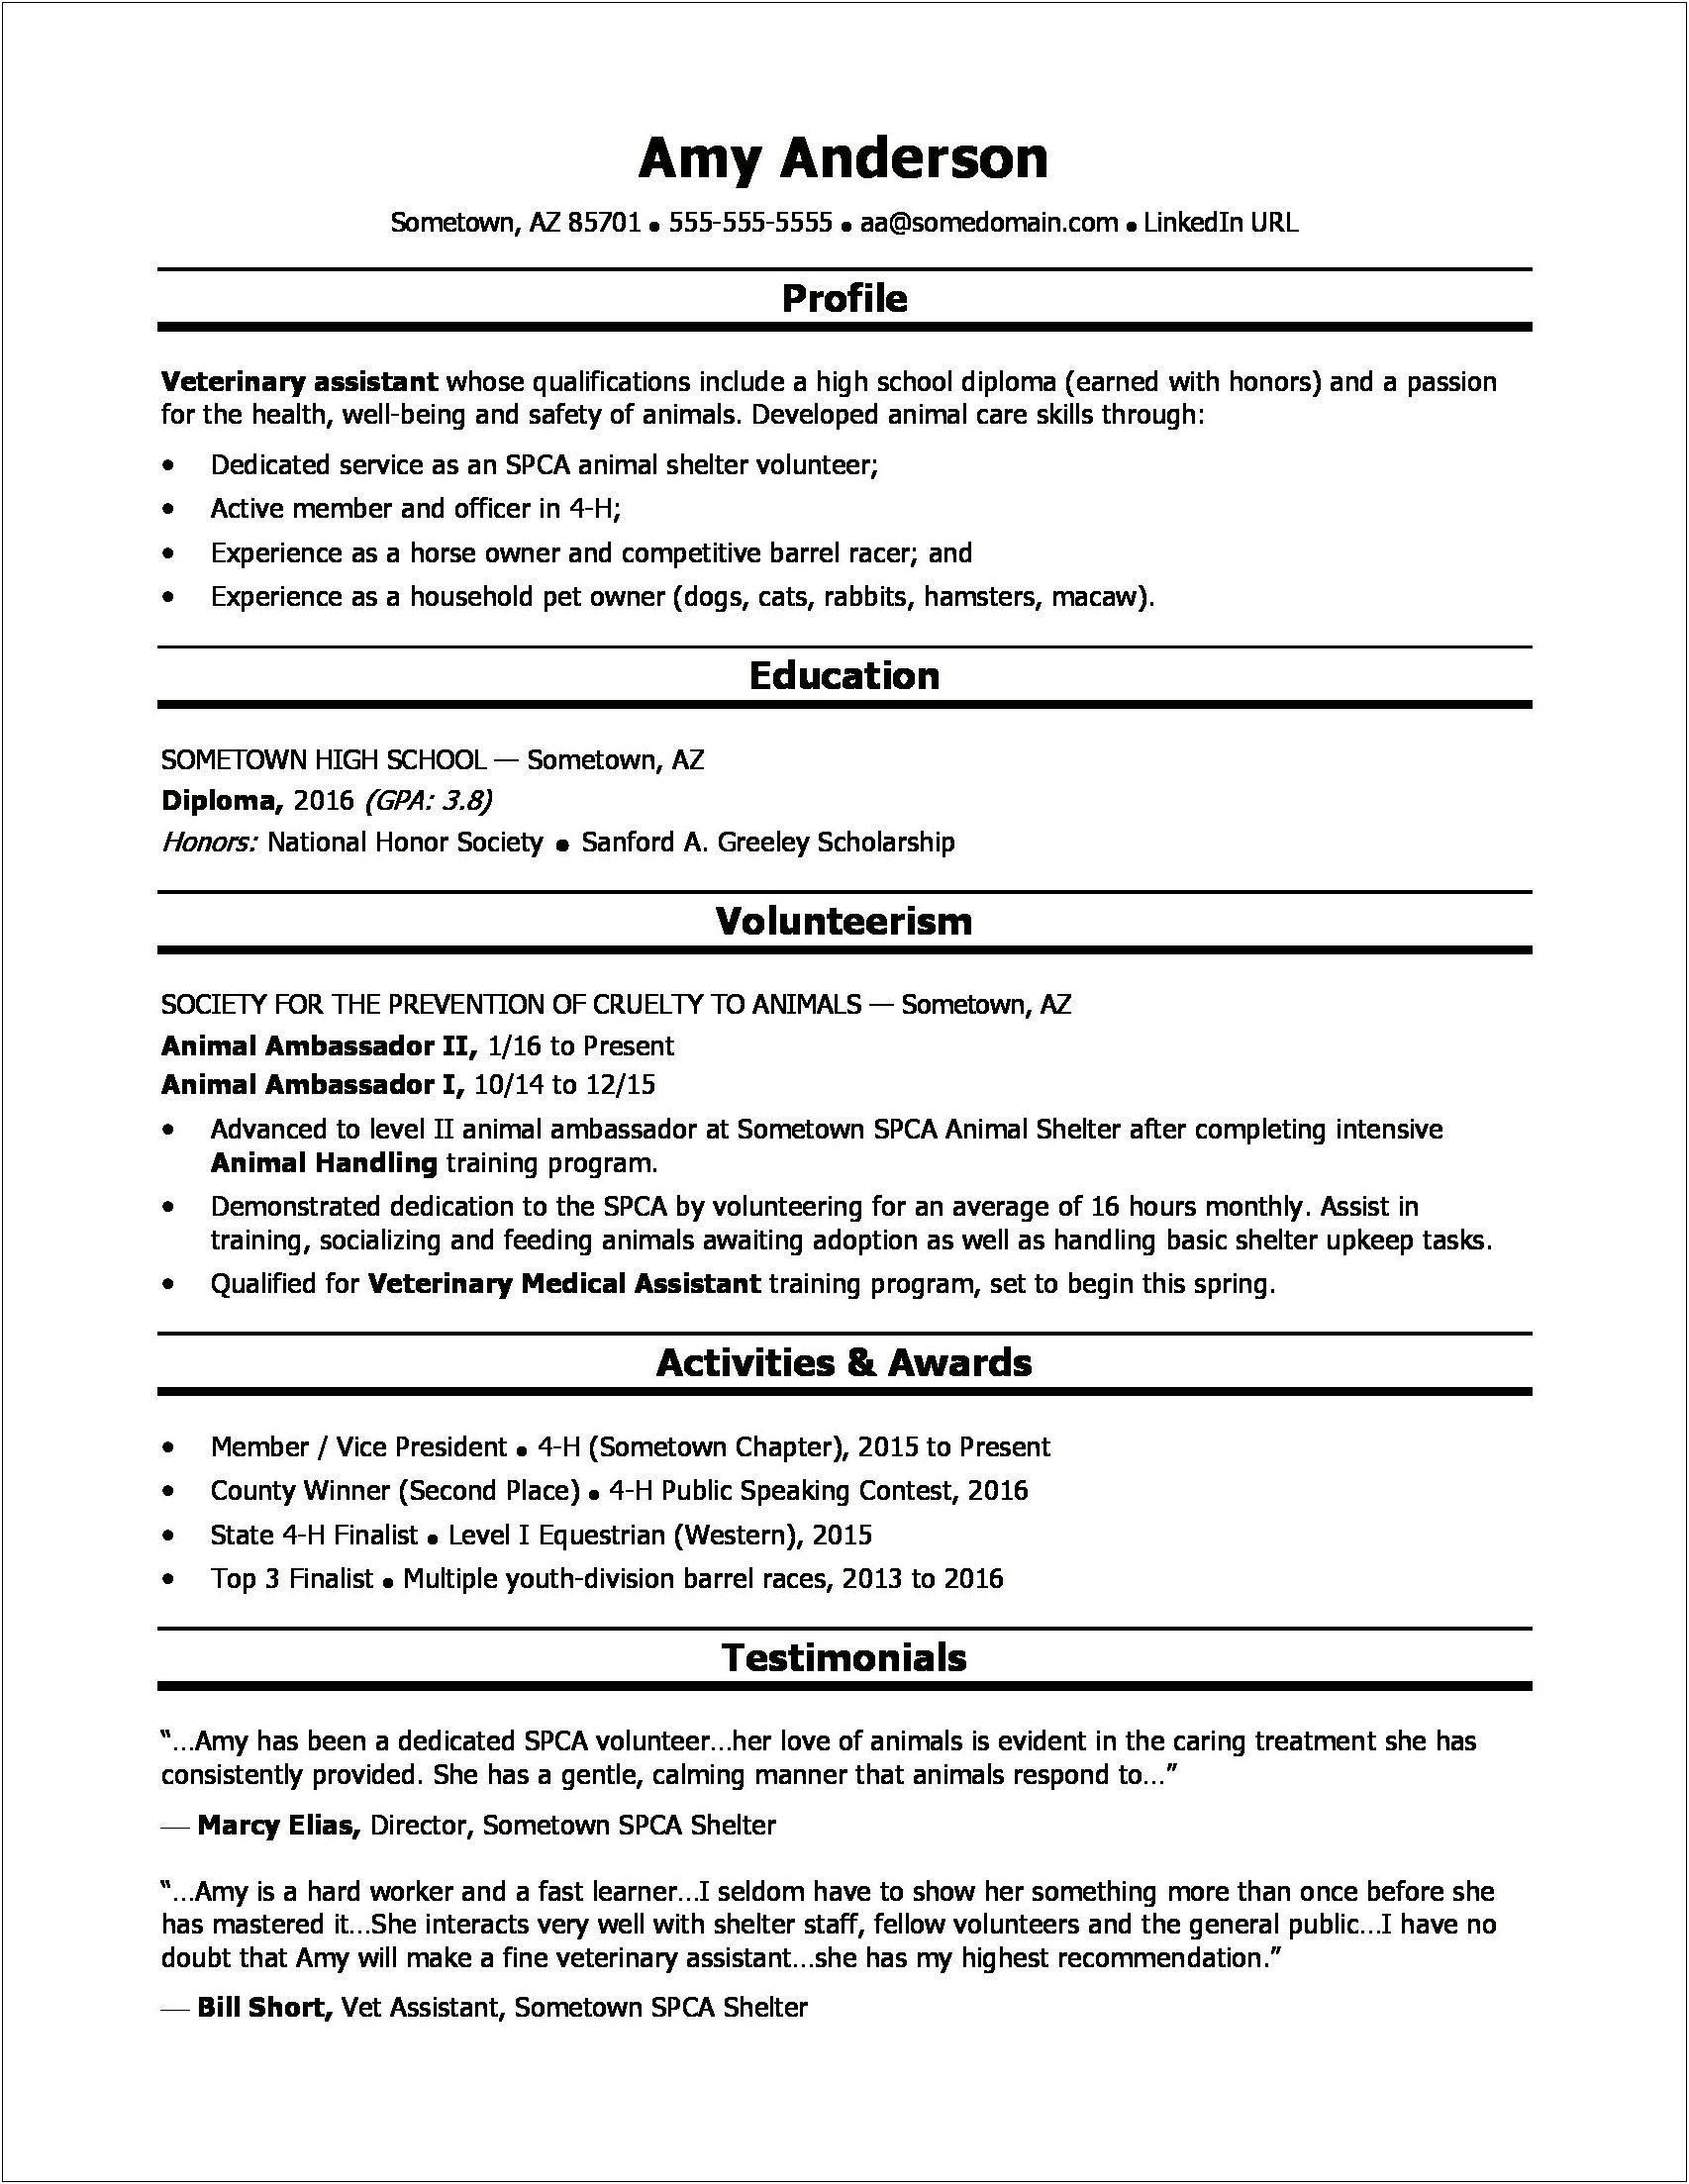 Sample Resume For Higher Education Position